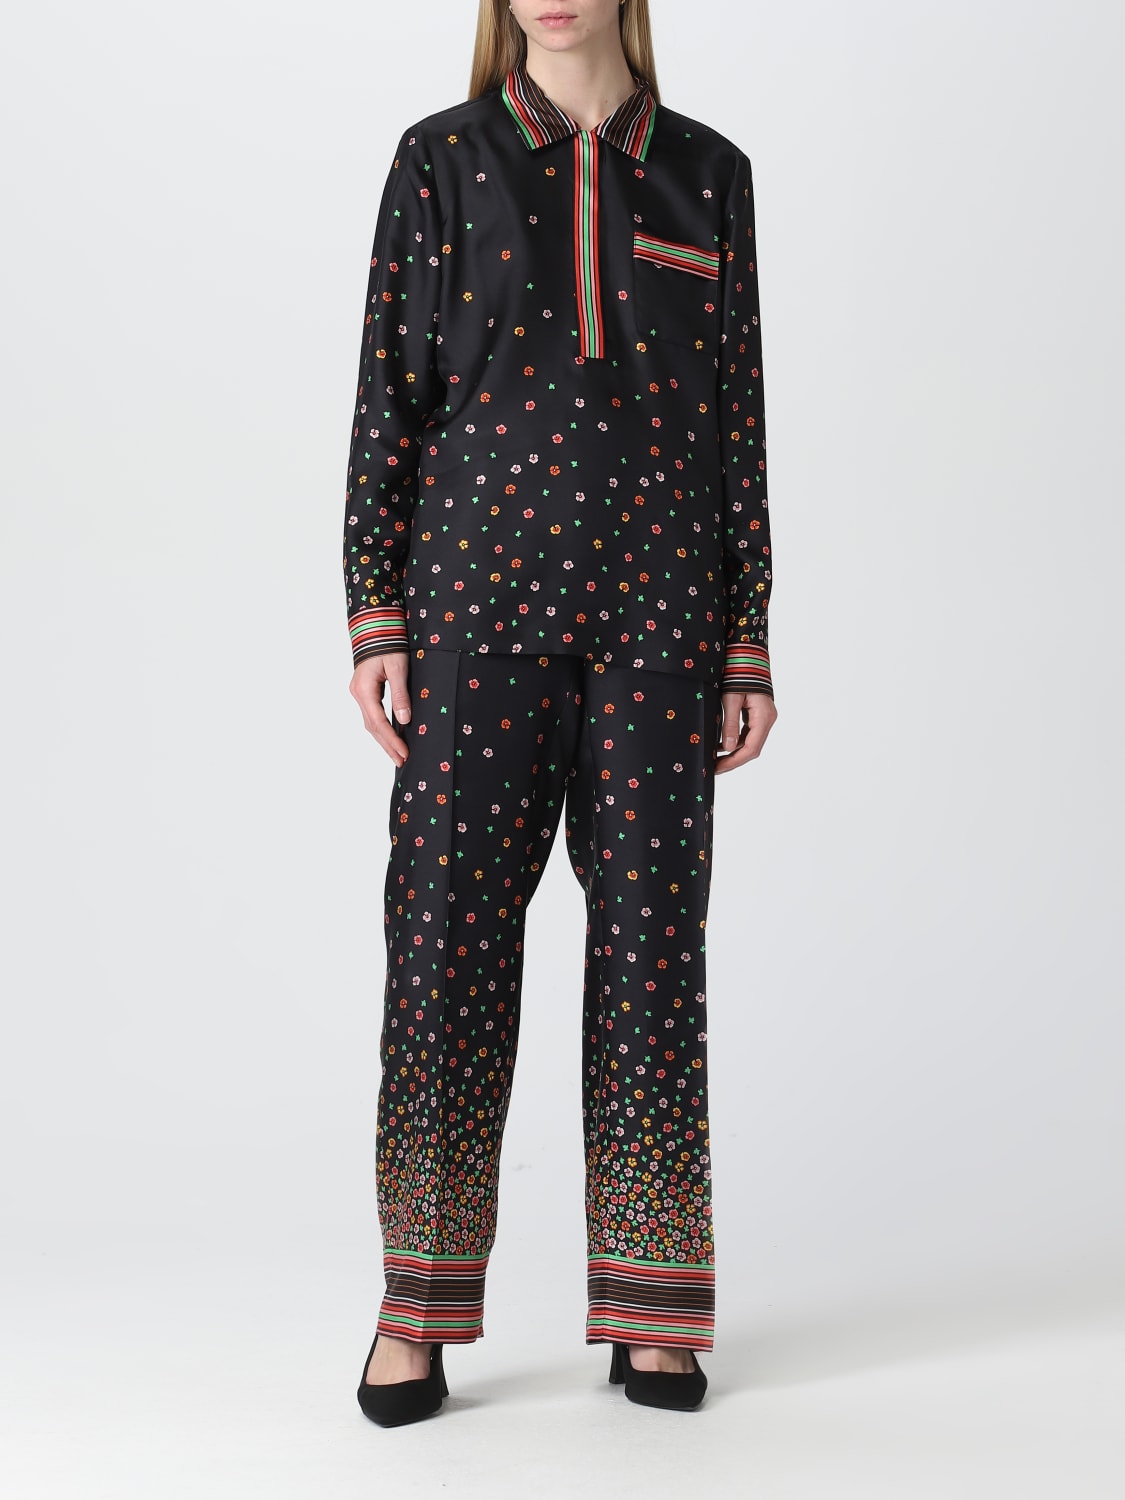 By Rotation - Louis Vuitton Pyjama Trousers  Womens pants design, Clothes  design, High fashion women